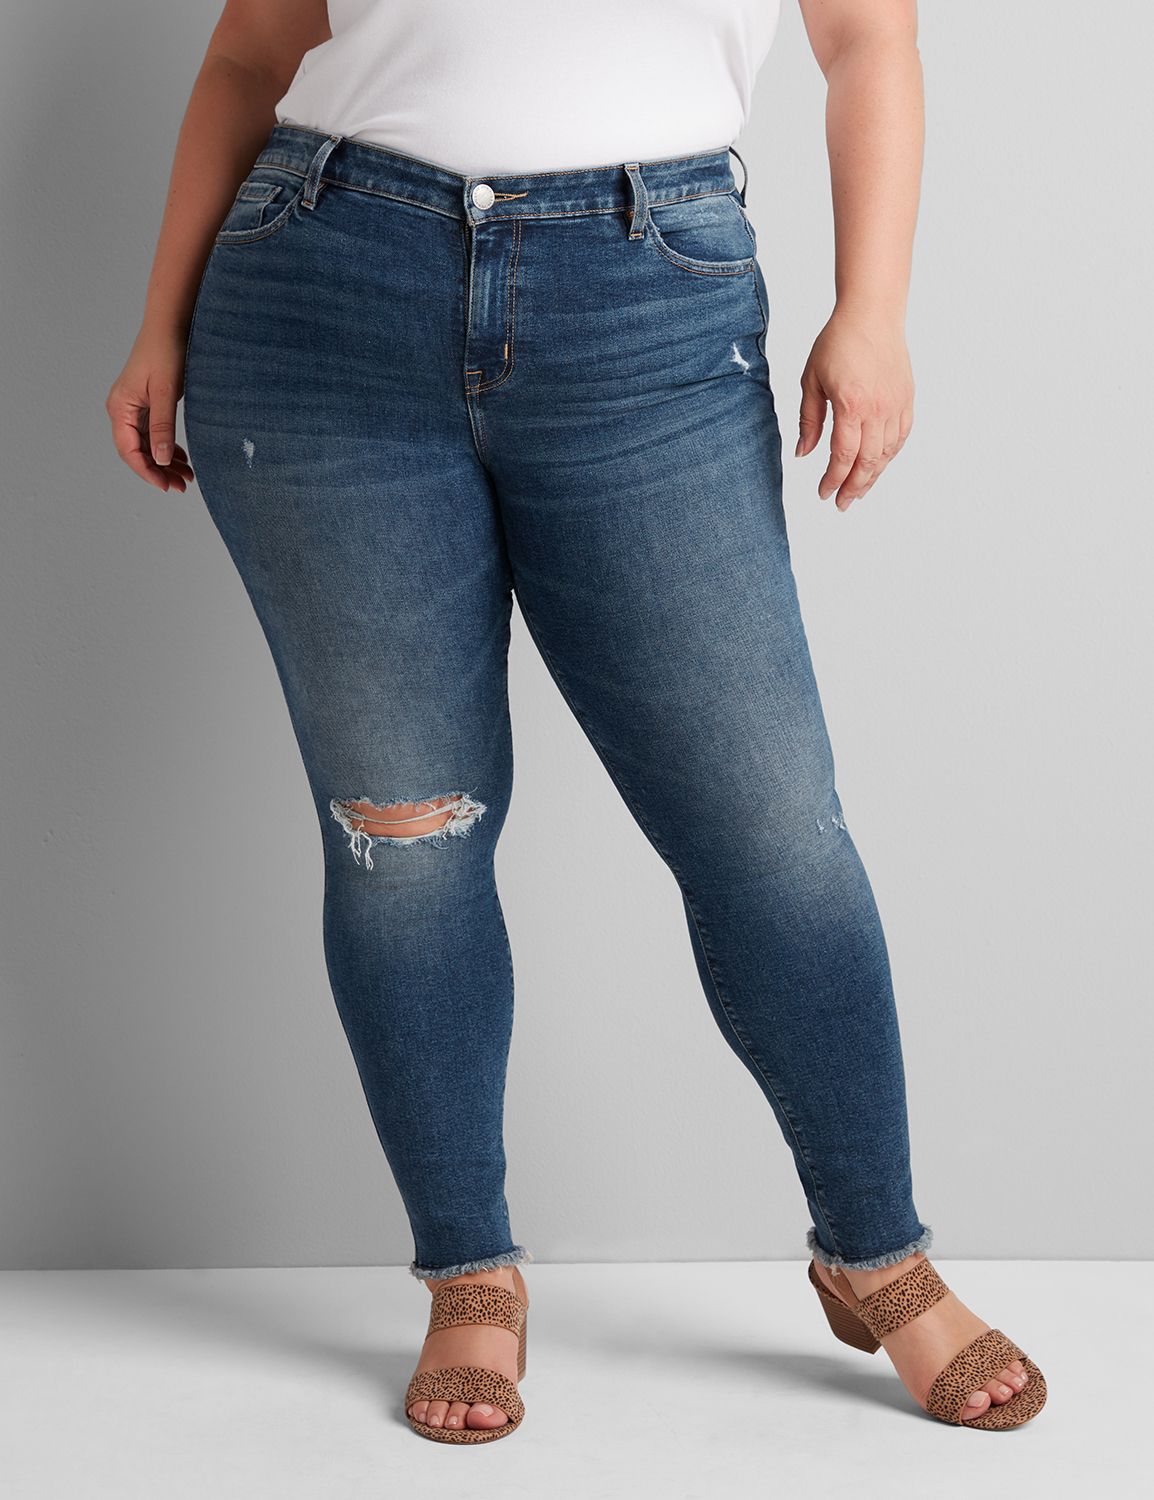 lane bryant distressed jeans